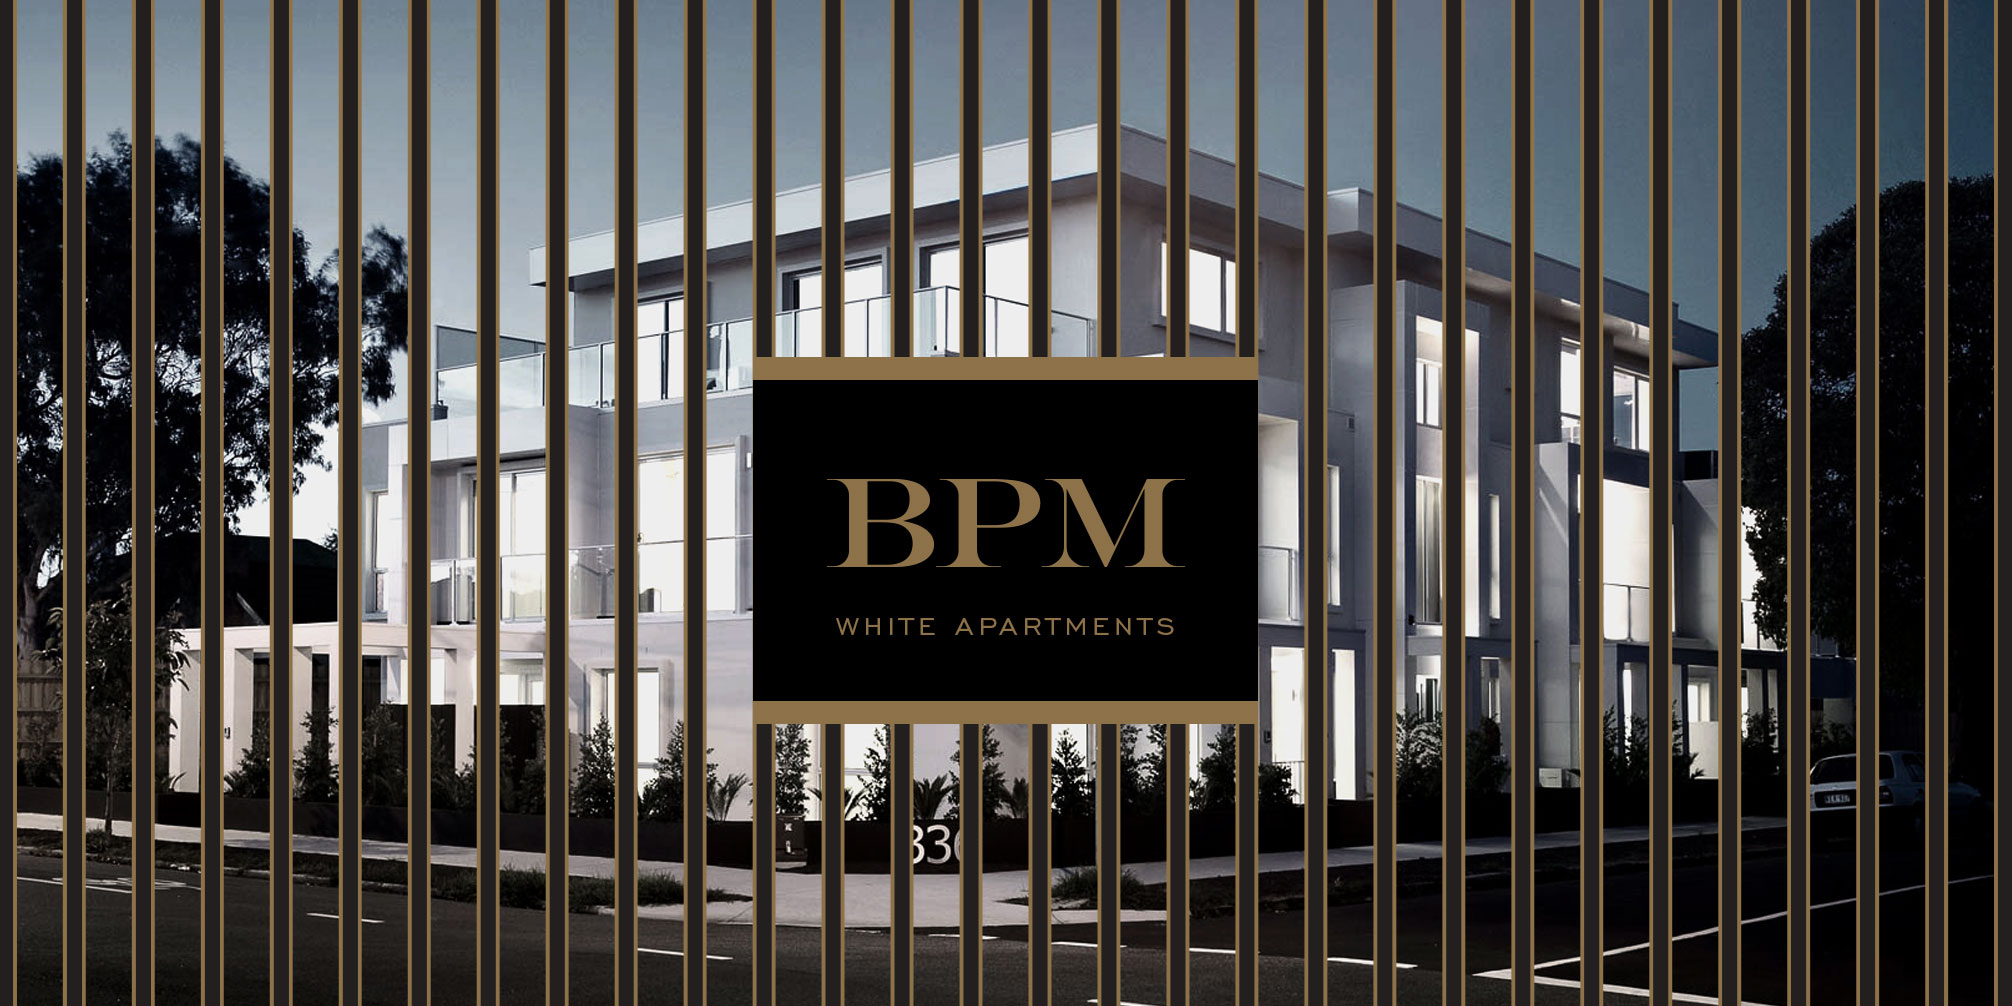 BPMCORP CORP BPM PROPERTY DEVELOPMENT MANAGEMENT CONSTRUCTION JONATHAN HALLINAN INVESTMENT MELBOURNE BRISBANE REAL ESTATE APARTMENTS ENQUIRY OFF PLAN BOUTIQUE PROJECT